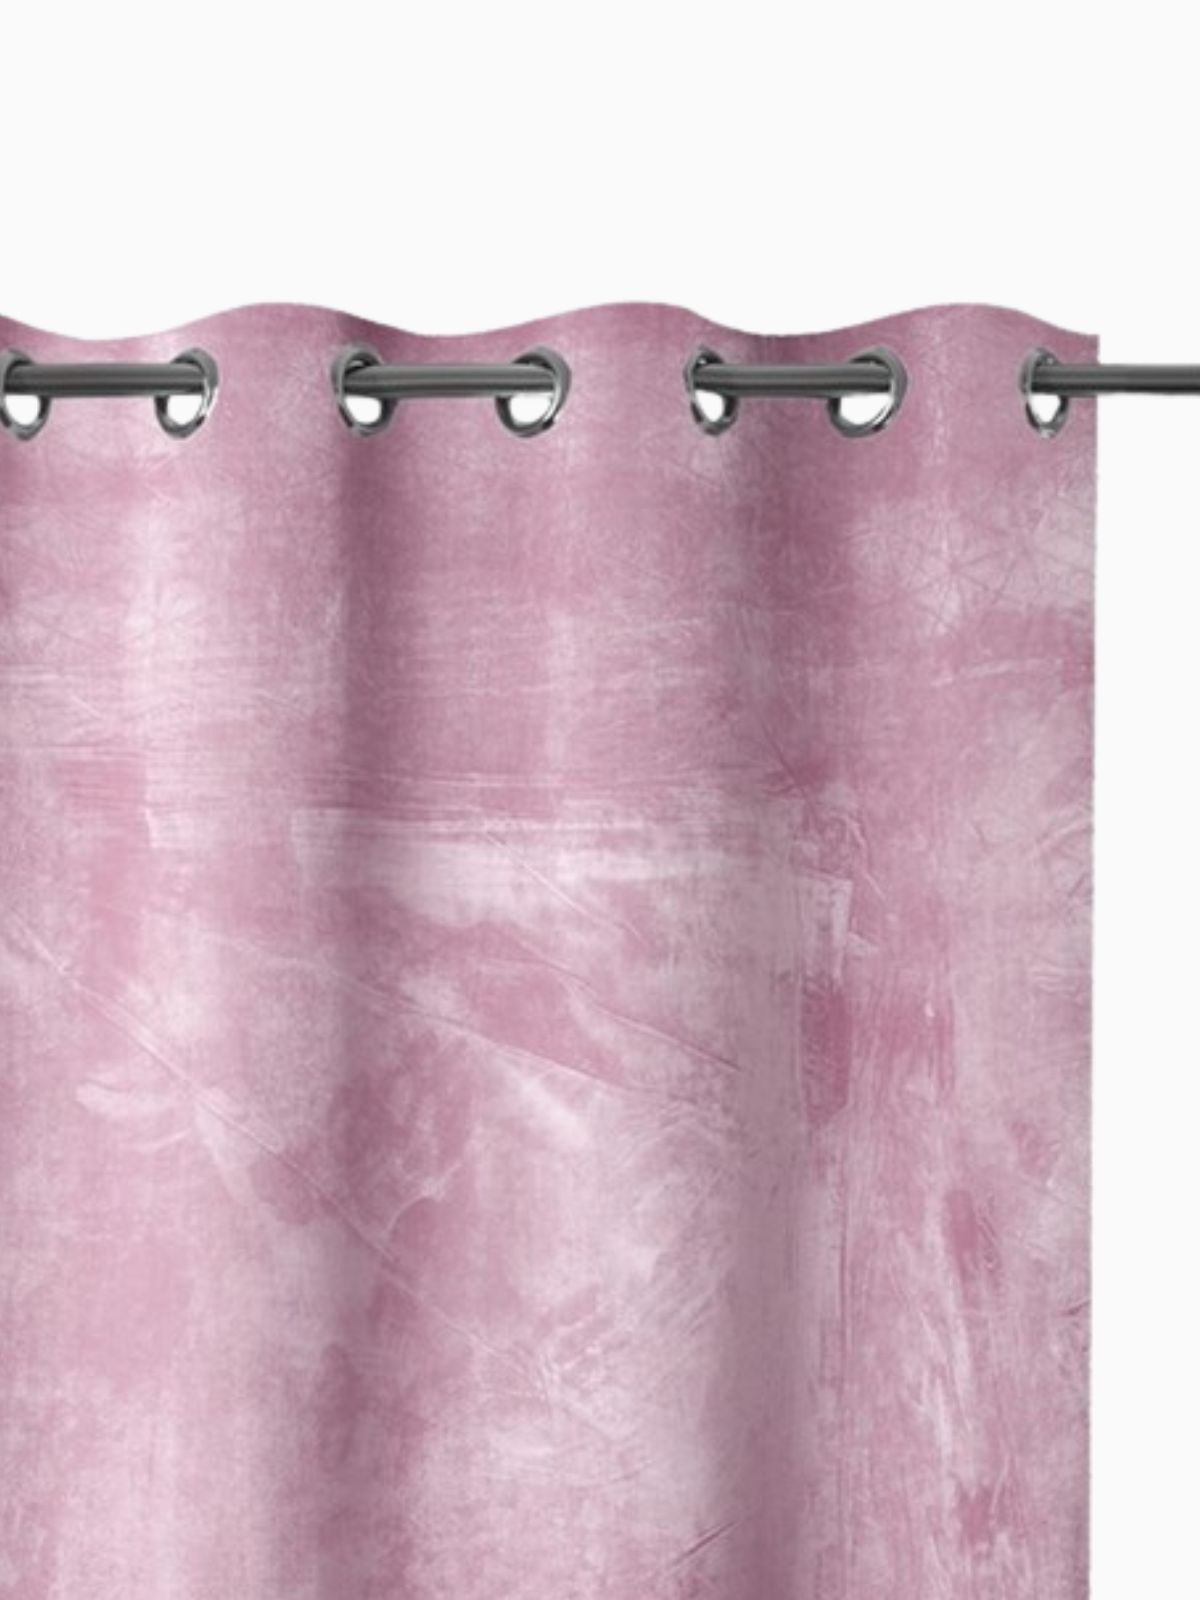 Tenda Velvet in colore rosa, effetto velluto 140x270 cm.-1